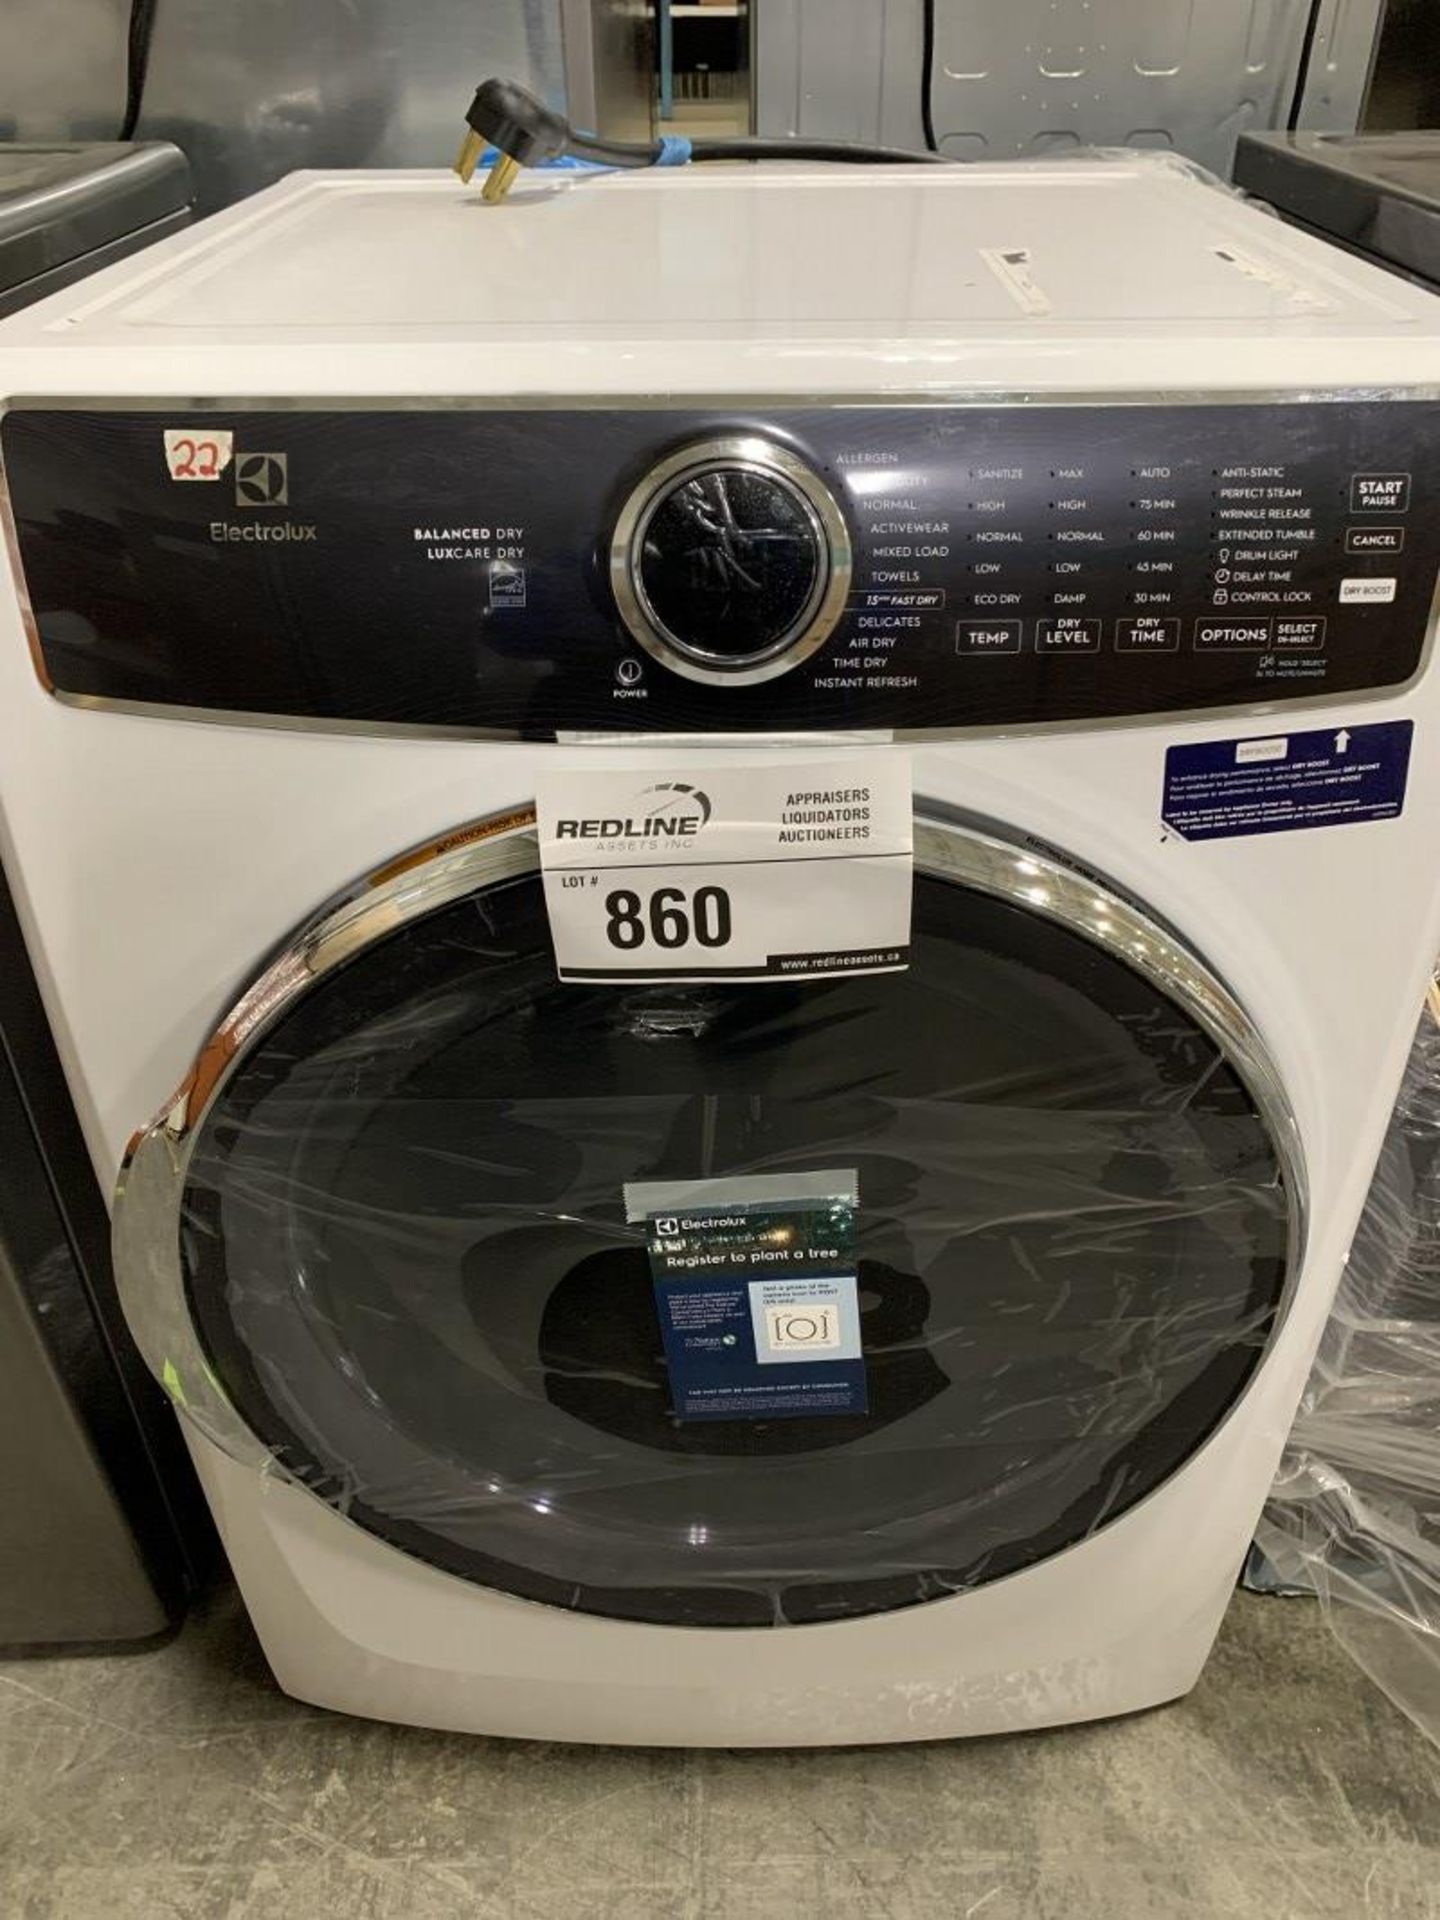 Electrolux Electric Dryer - 27 Inch Width, 8.0 Cu. Ft. Capacity, Steam Clean, 5 Temperature